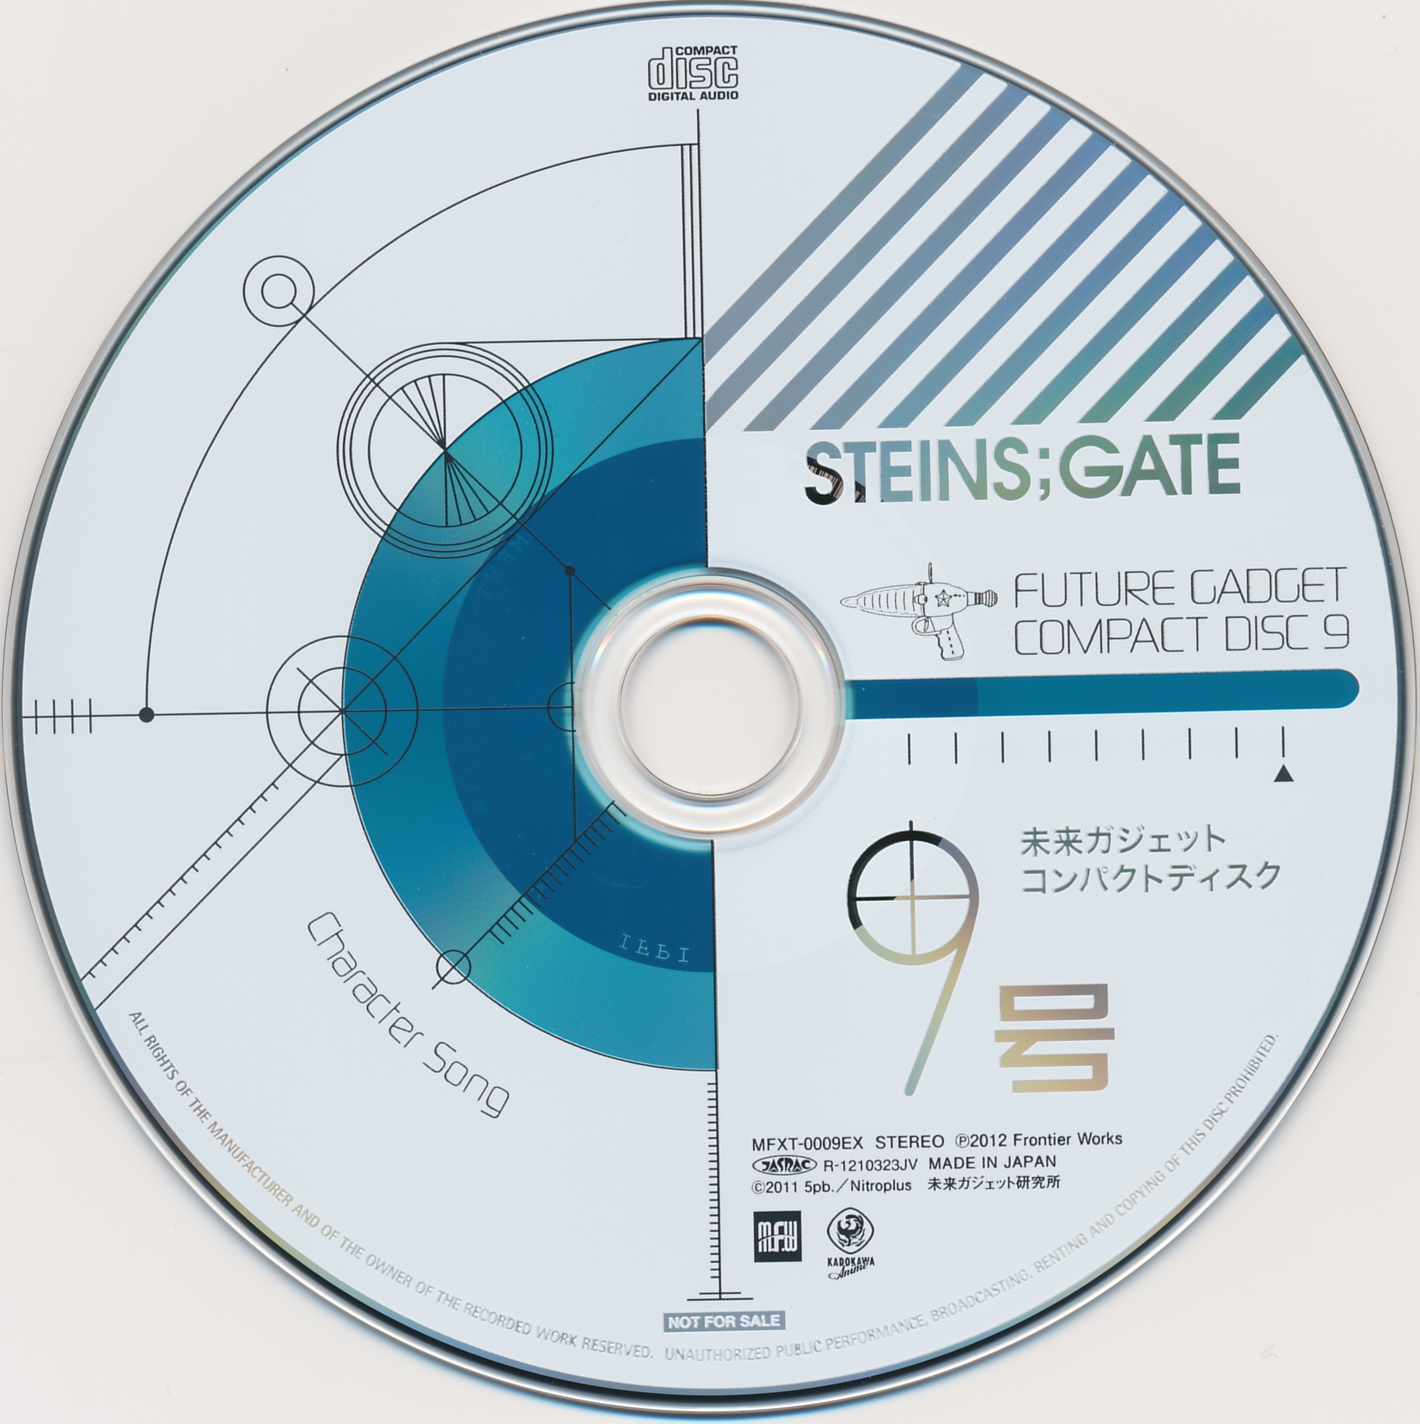 光碟-STEINS;GATE FUTURE GADGET COMPACT DISC 9.jpg